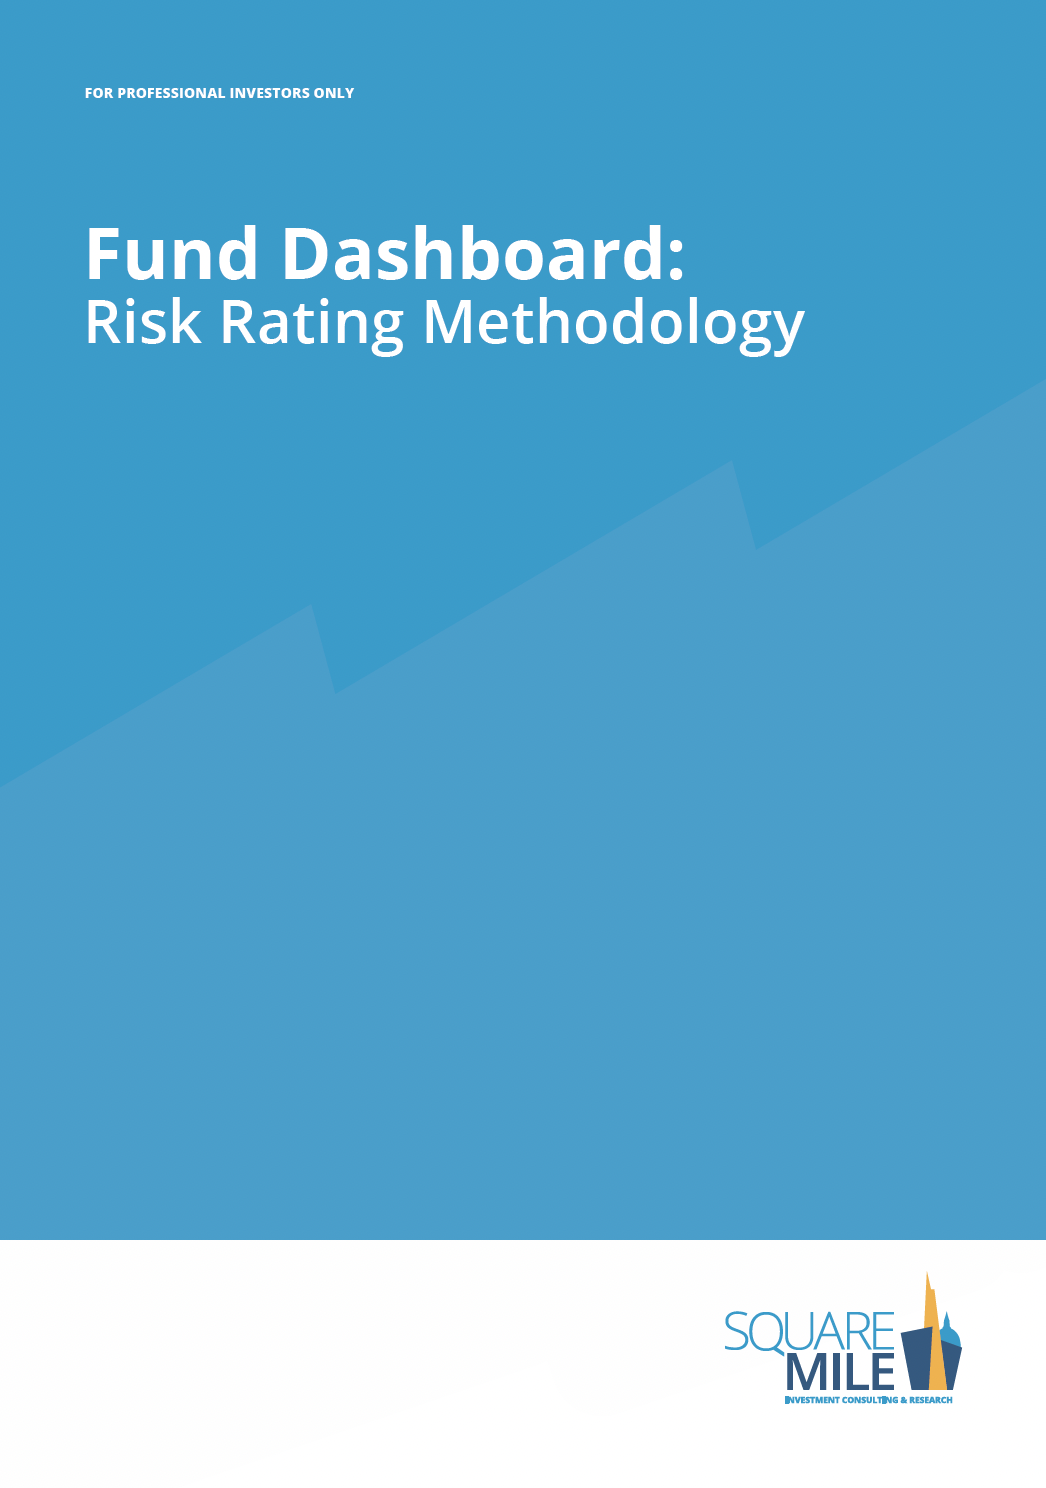 Fund-Dashboard-Risk-Methdology-Image